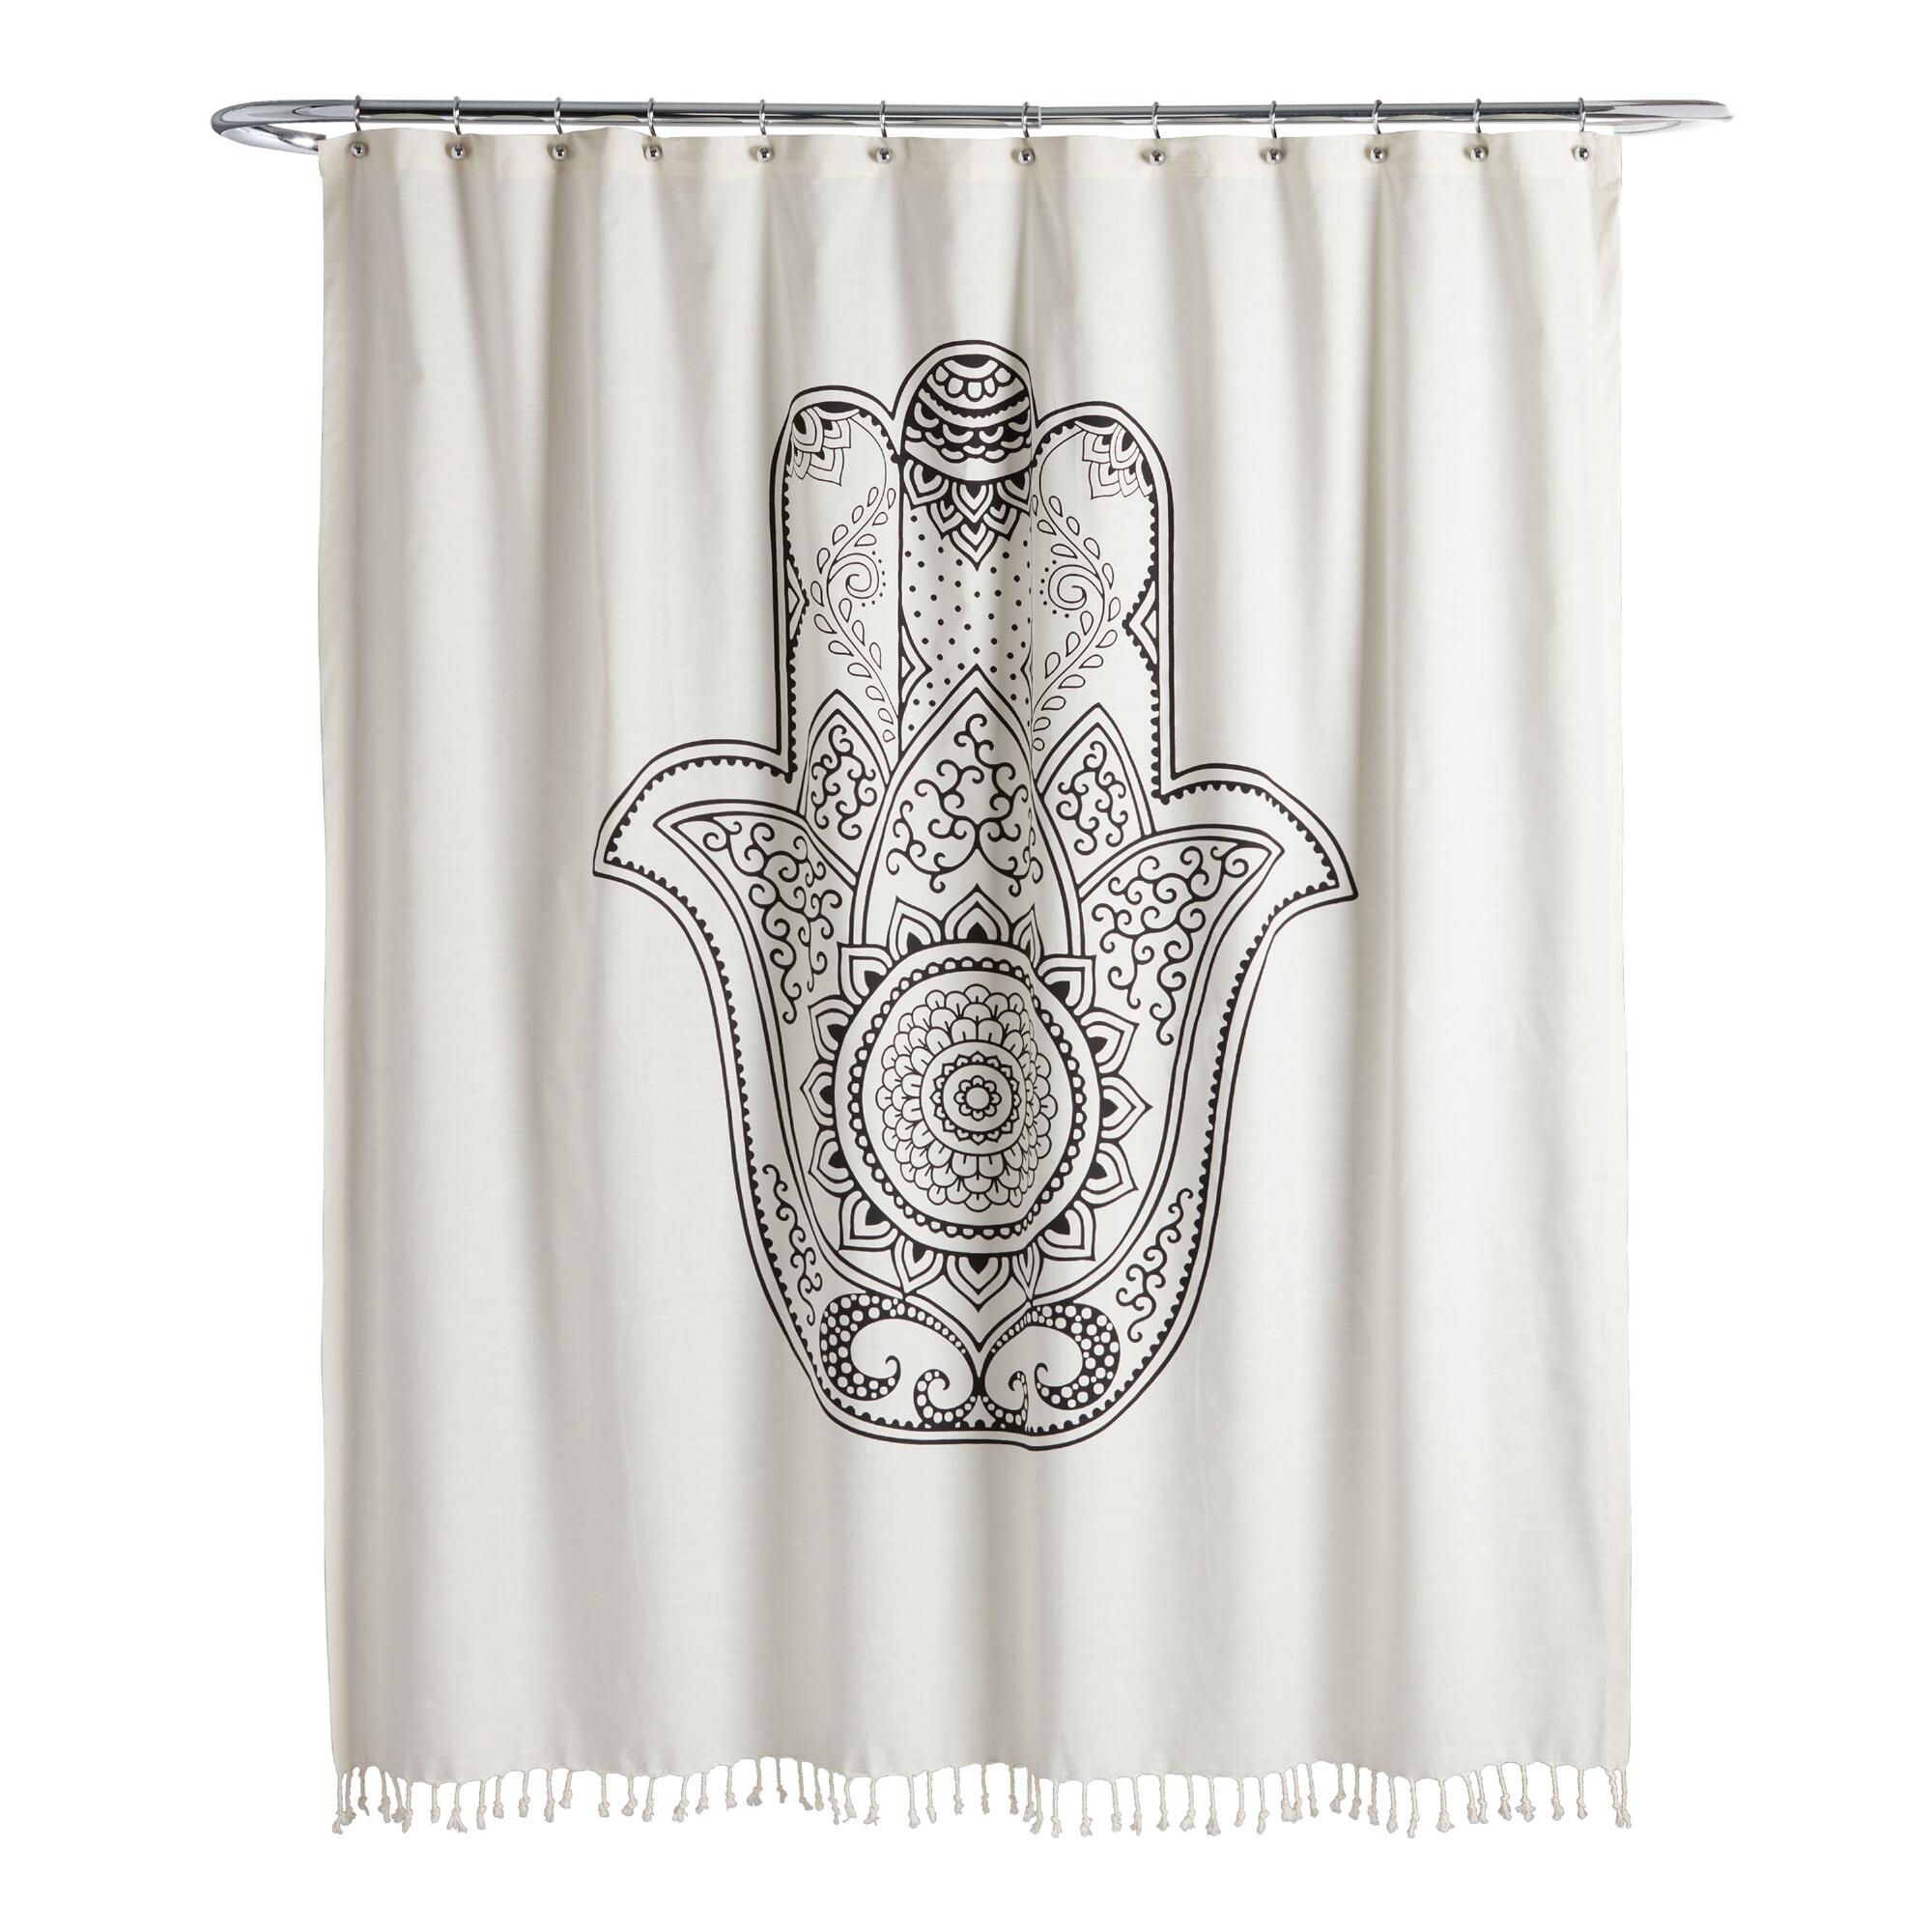 White and Black Hamsa Shower Curtain by World Market